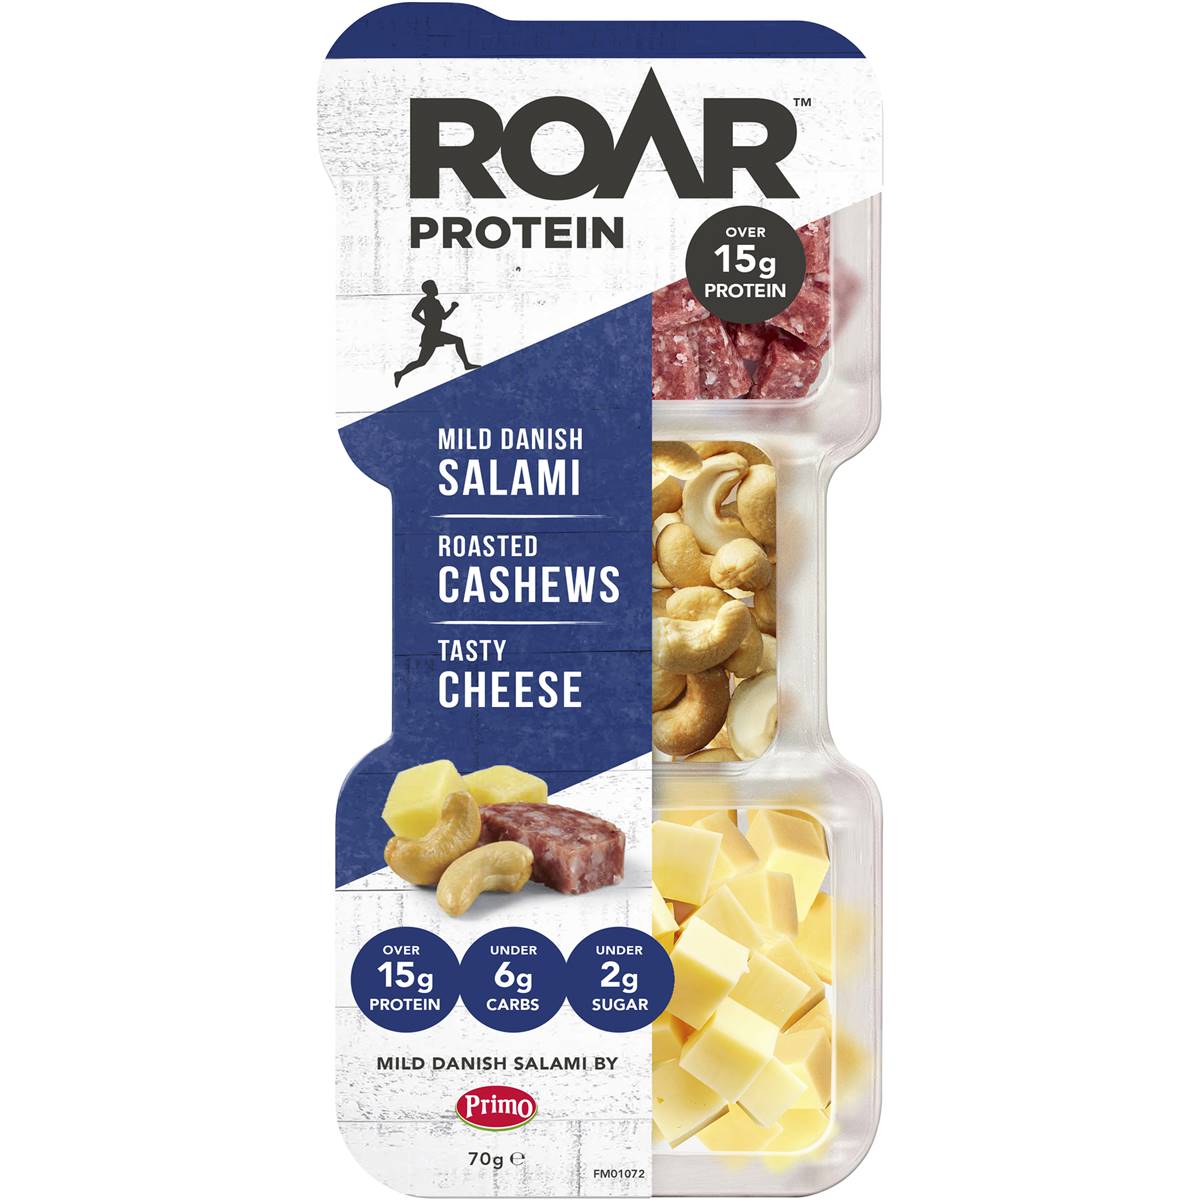 Calories in Roar Protein Mild Danish Salami, Roasted Cashews & Cheese